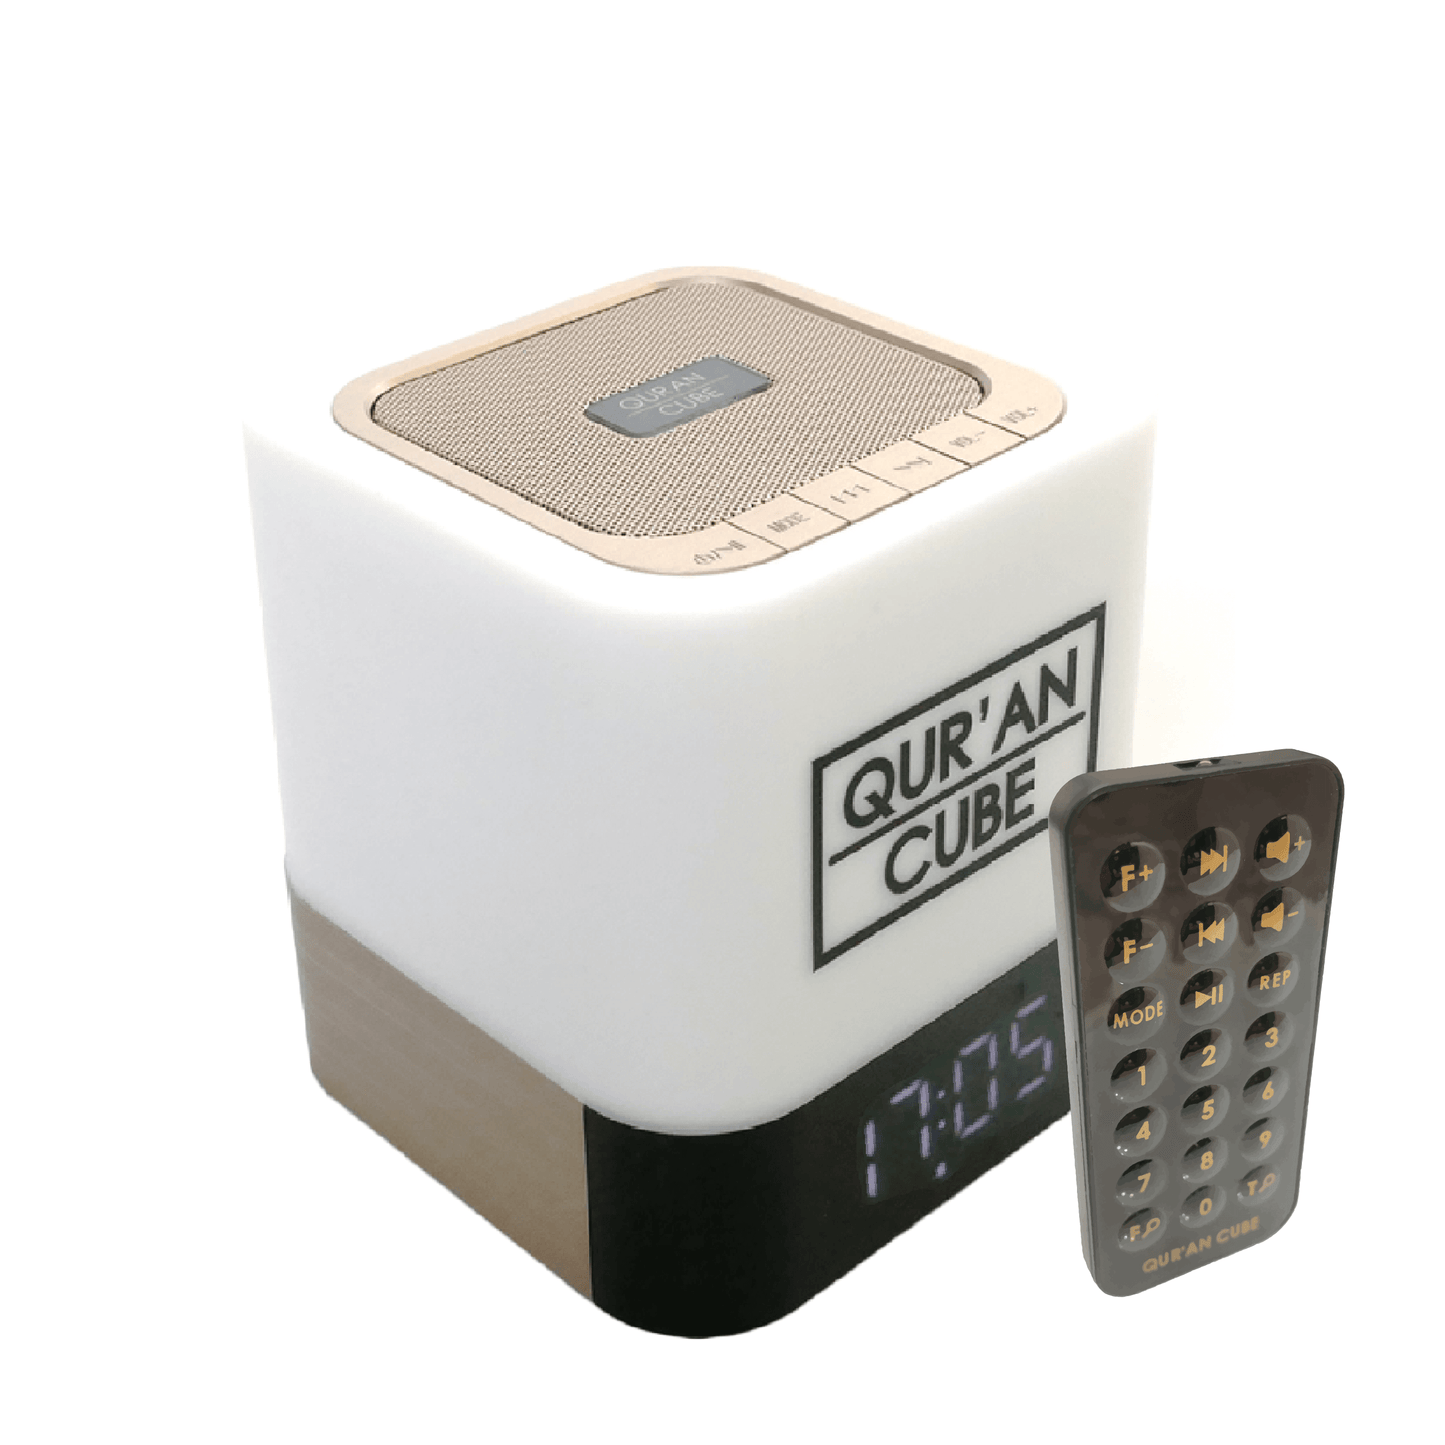 Quran Cube LedX - Quran Speaker (Latest Edition)